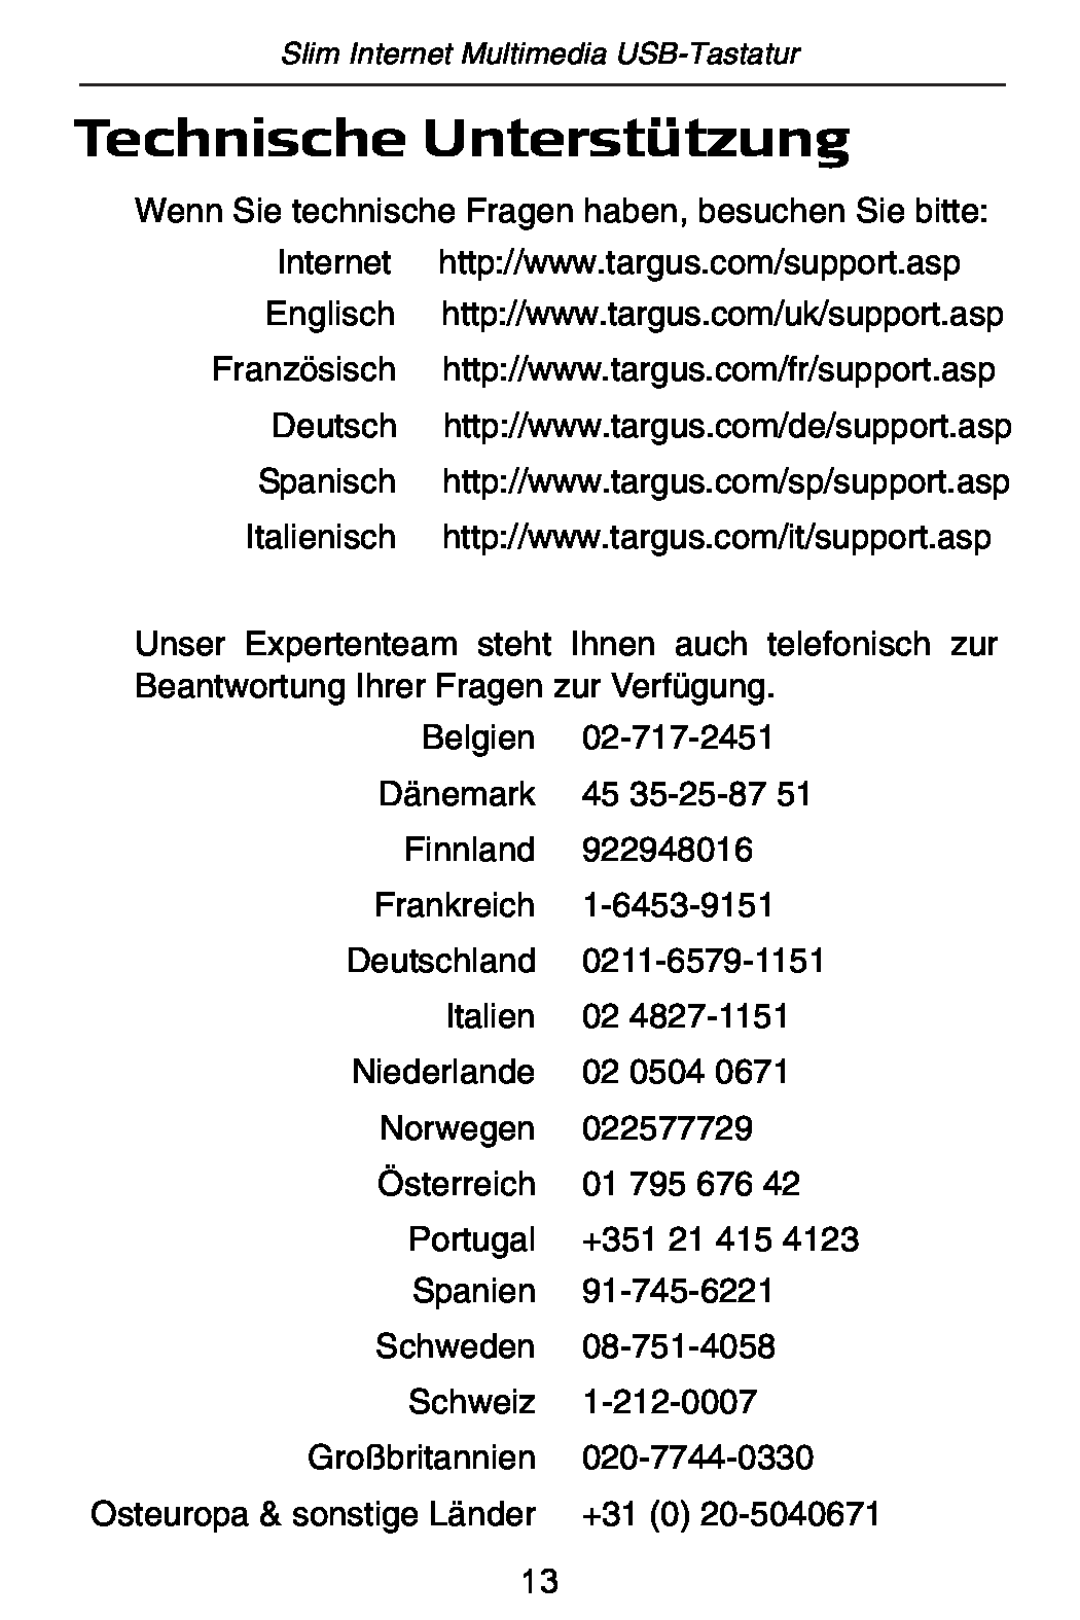 Targus slim internet multimedia USB keyboard specifications Technische Unterstützung, Osteuropa & sonstige Länder, +31 0 